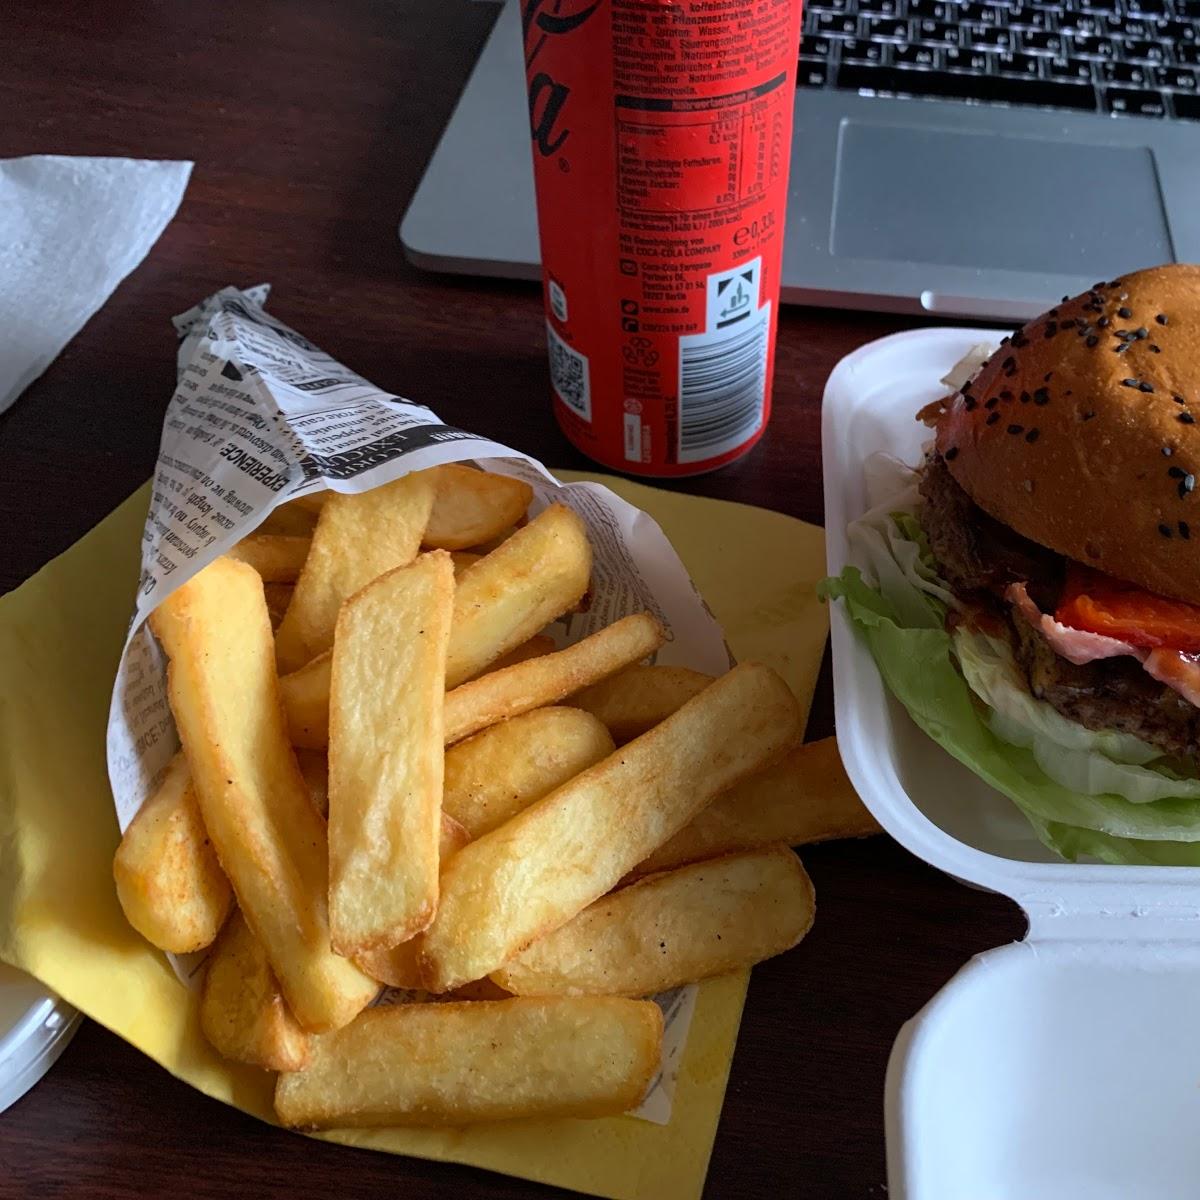 Restaurant "Burger Bey" in Hannover